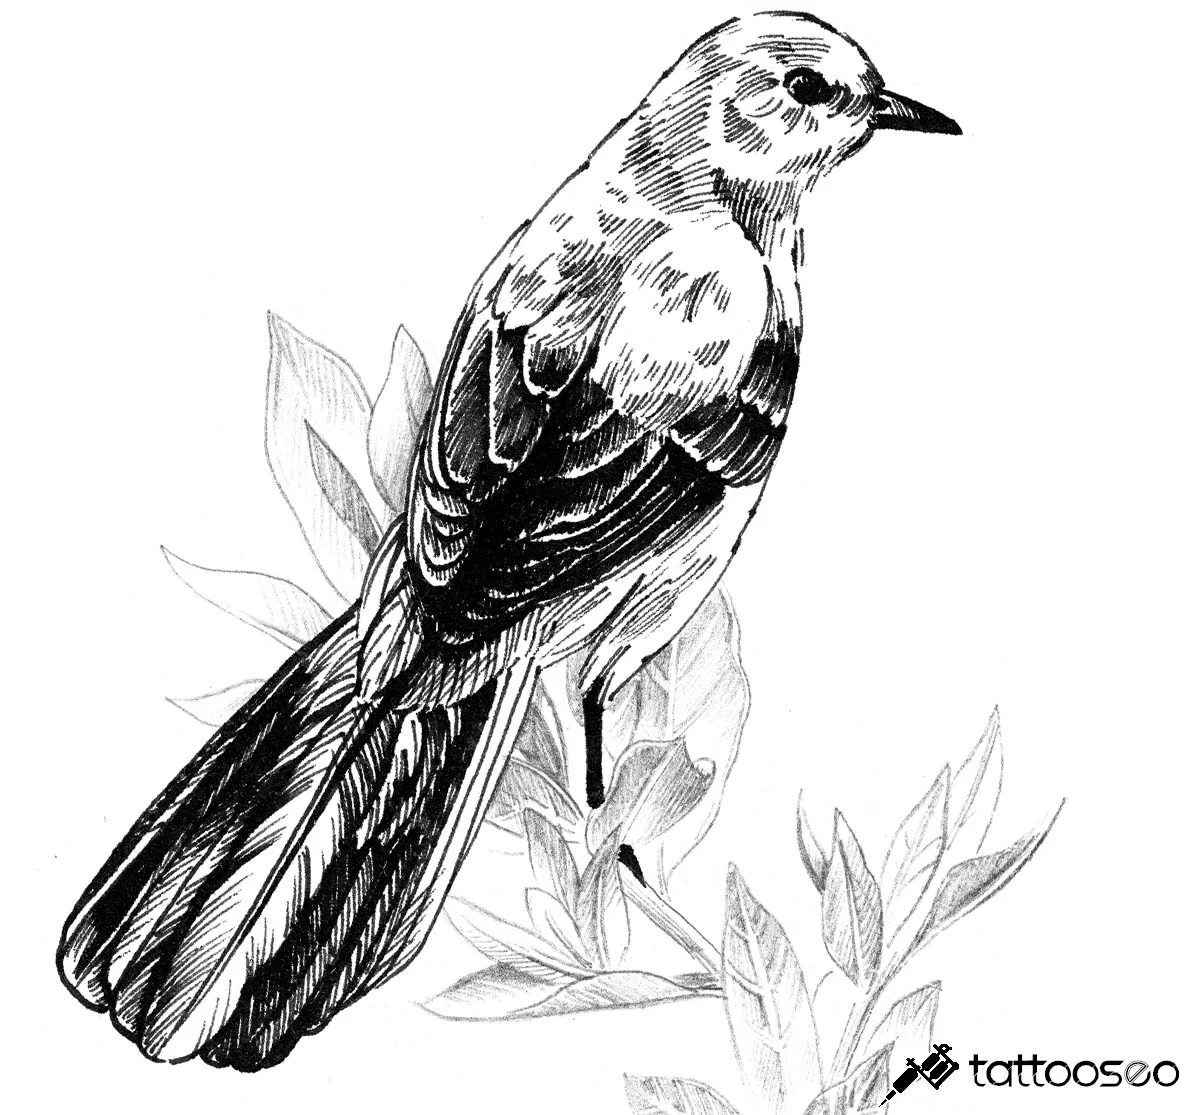 Mockingbird tattoo meaning